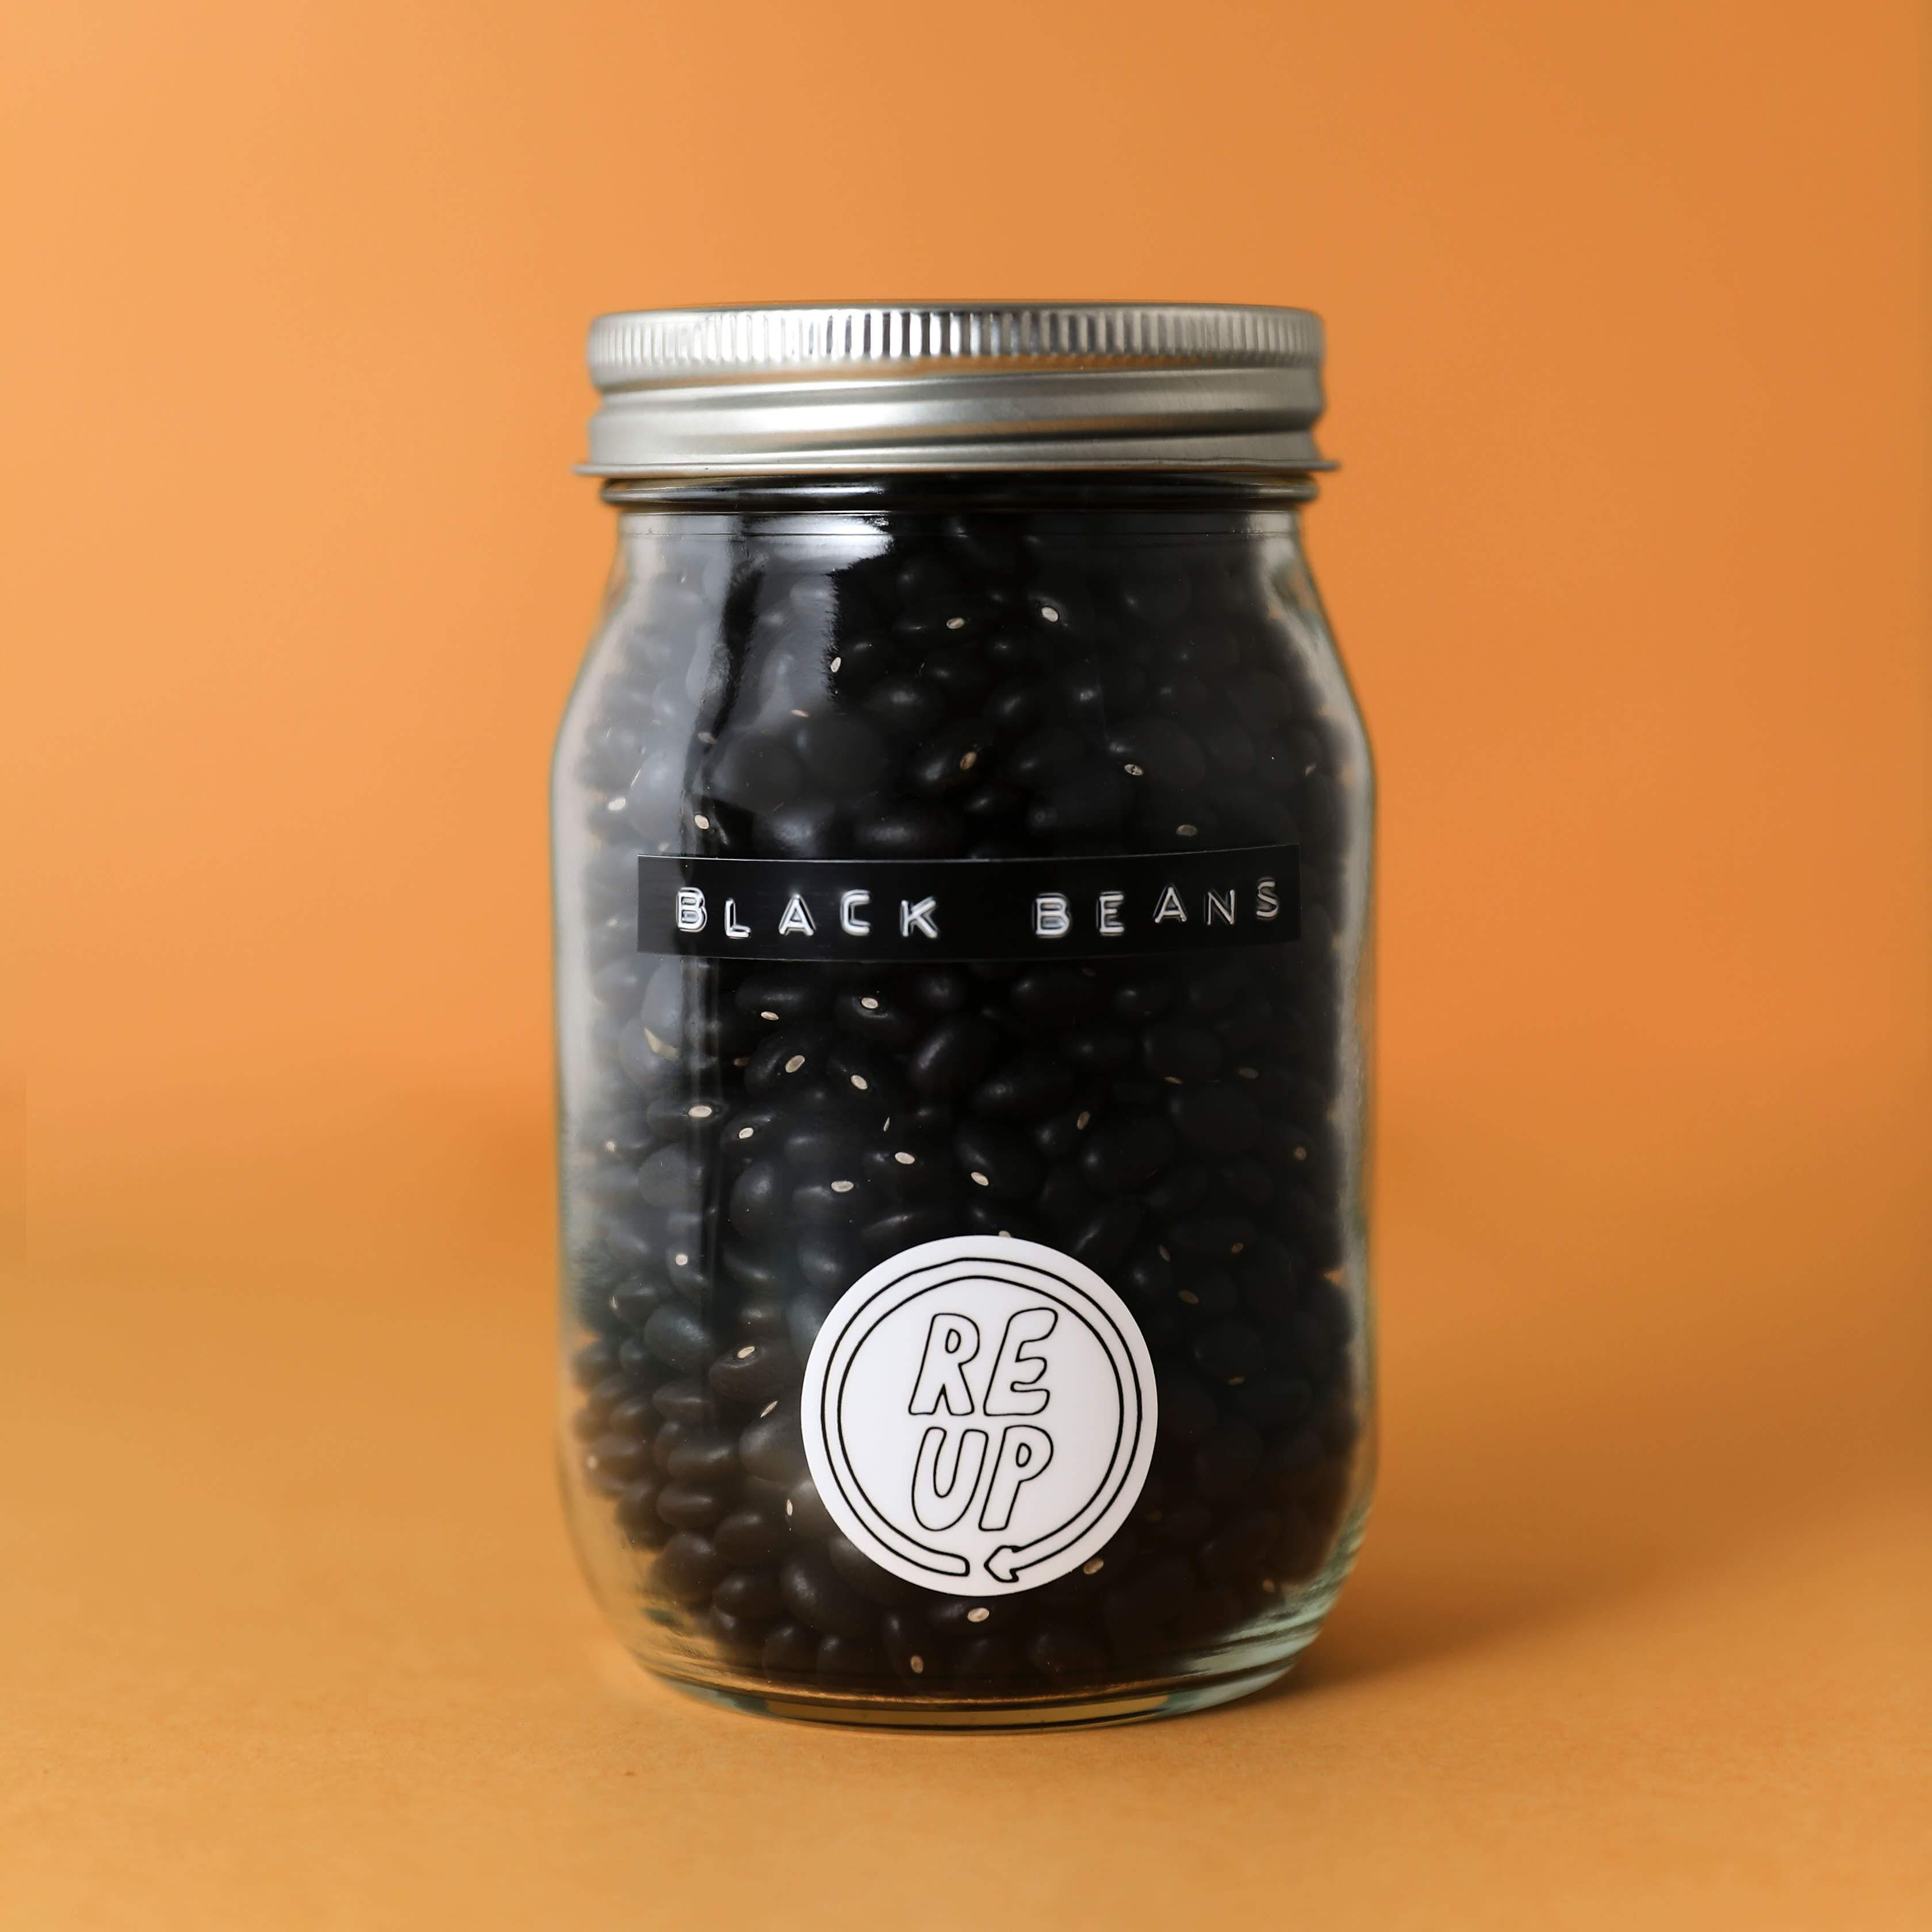 Organic Black Beans